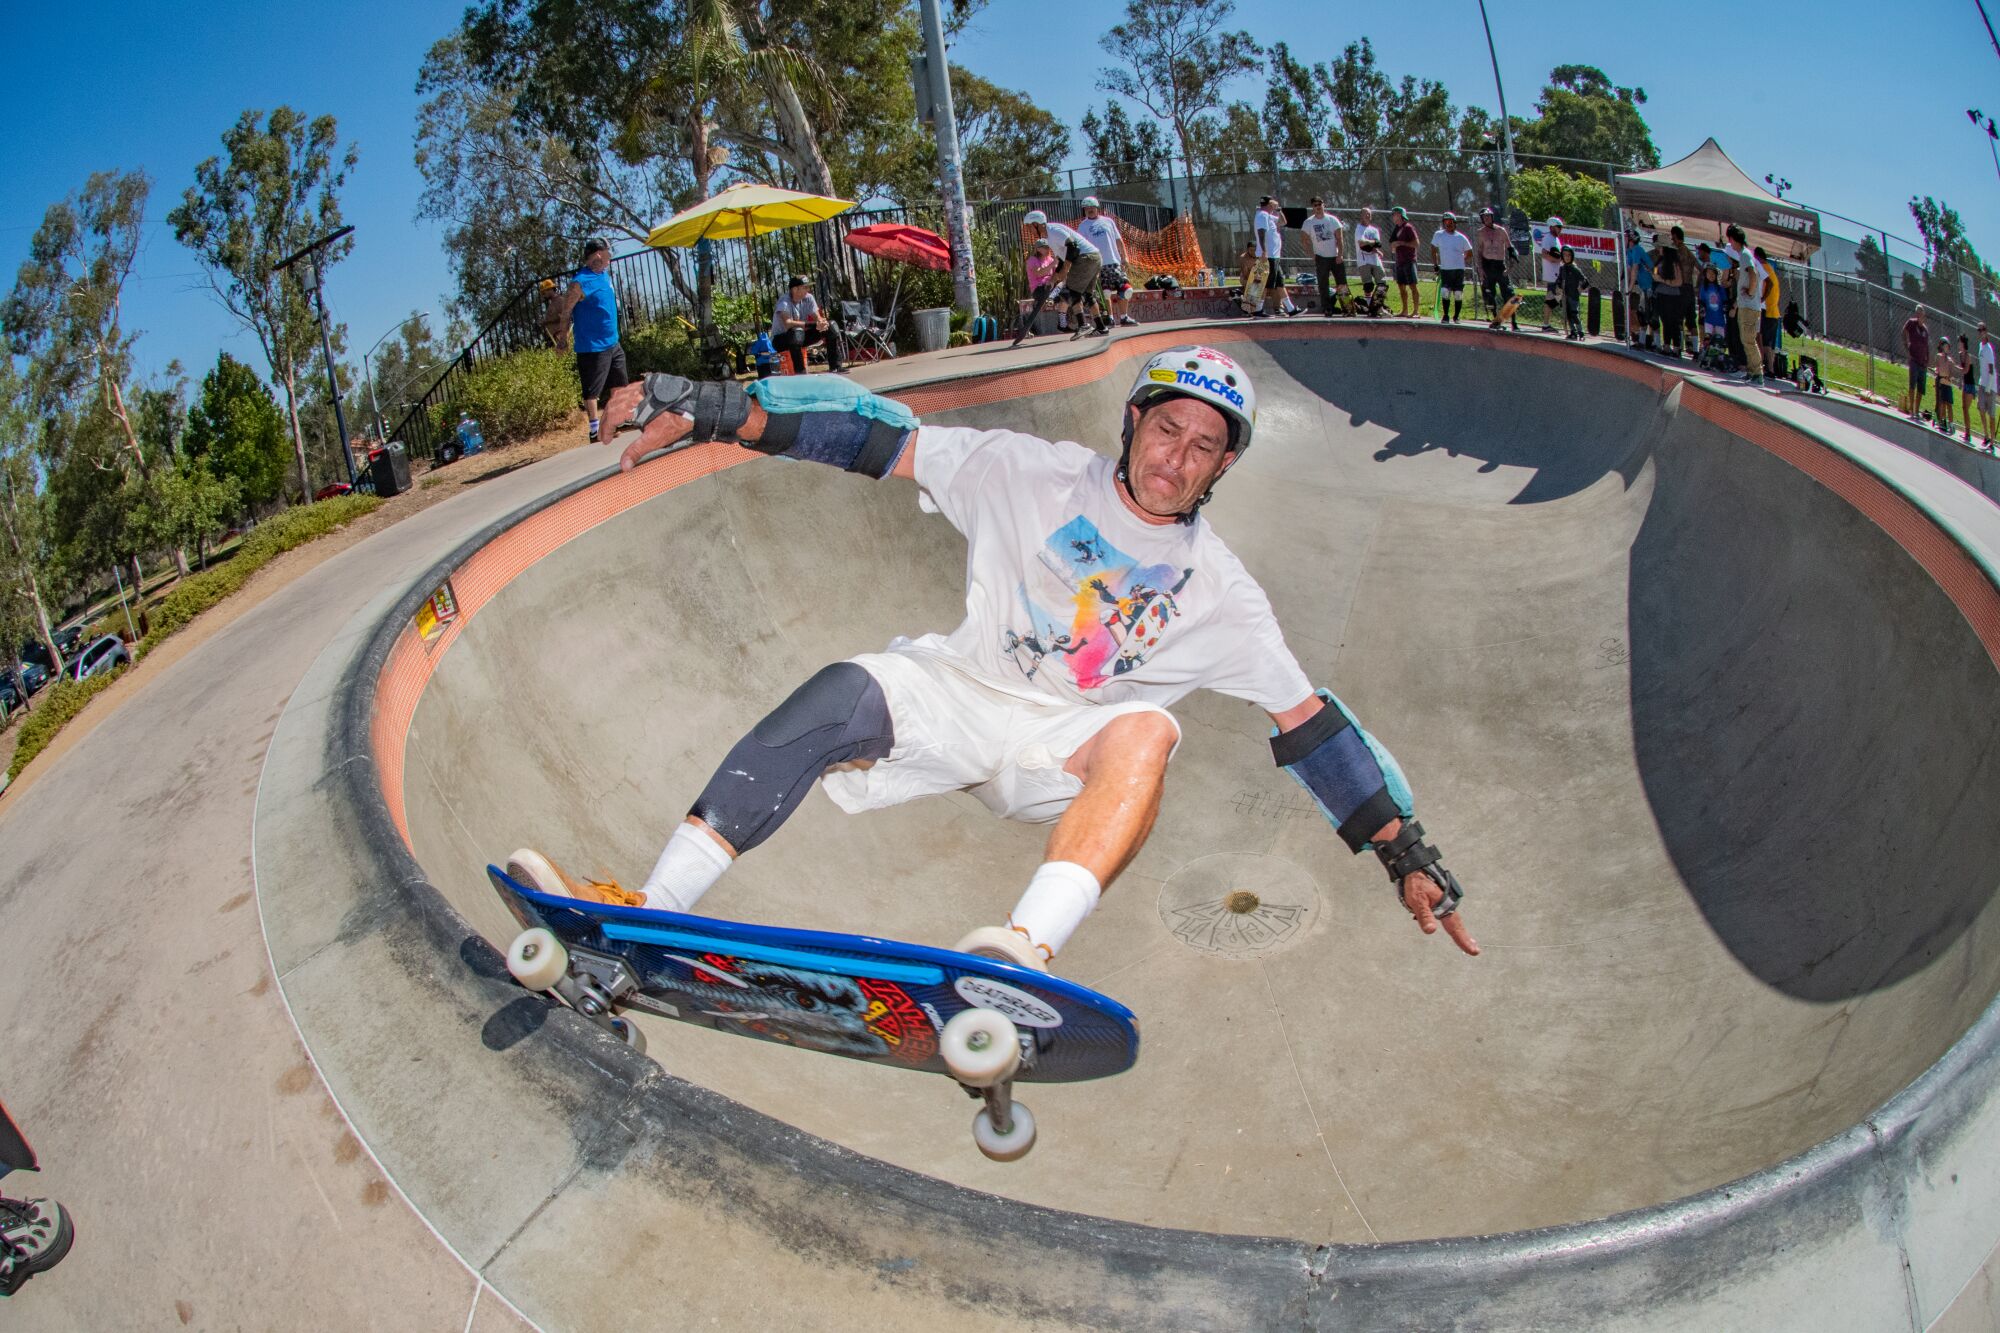 John Uhl skateboards in a pool at Linda Vista Skateboard Park.